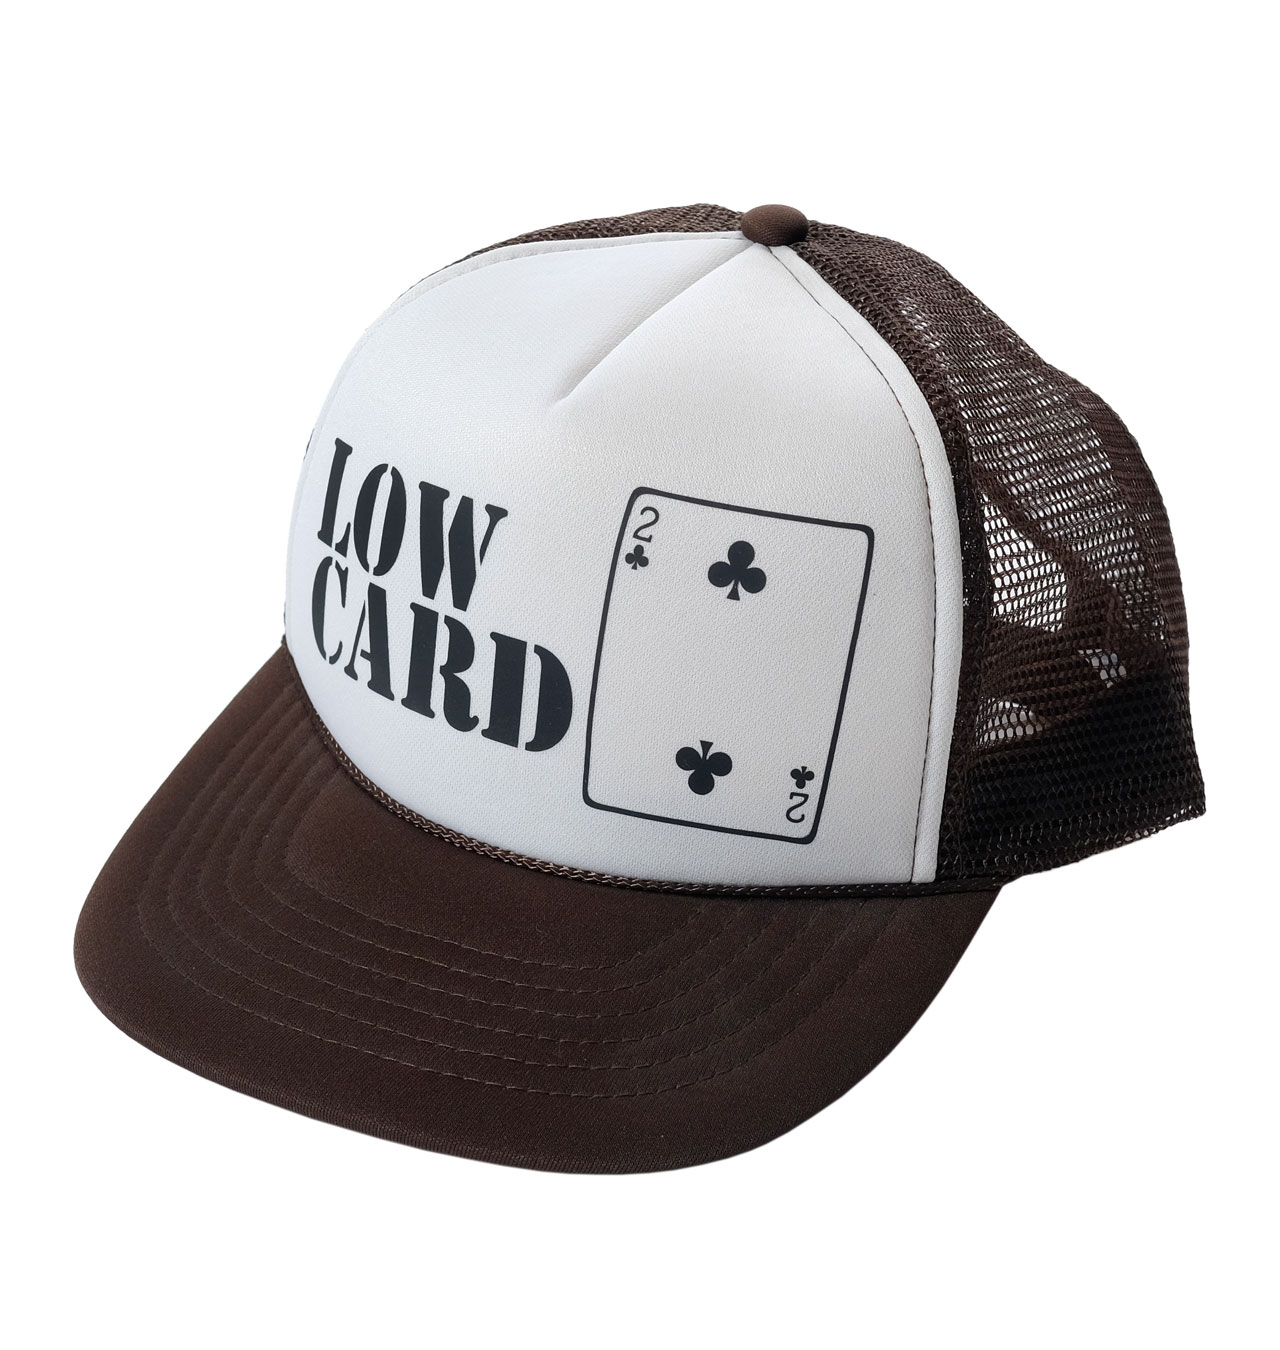 Lowcard - Original Logo Trucker Cap - Brown/White